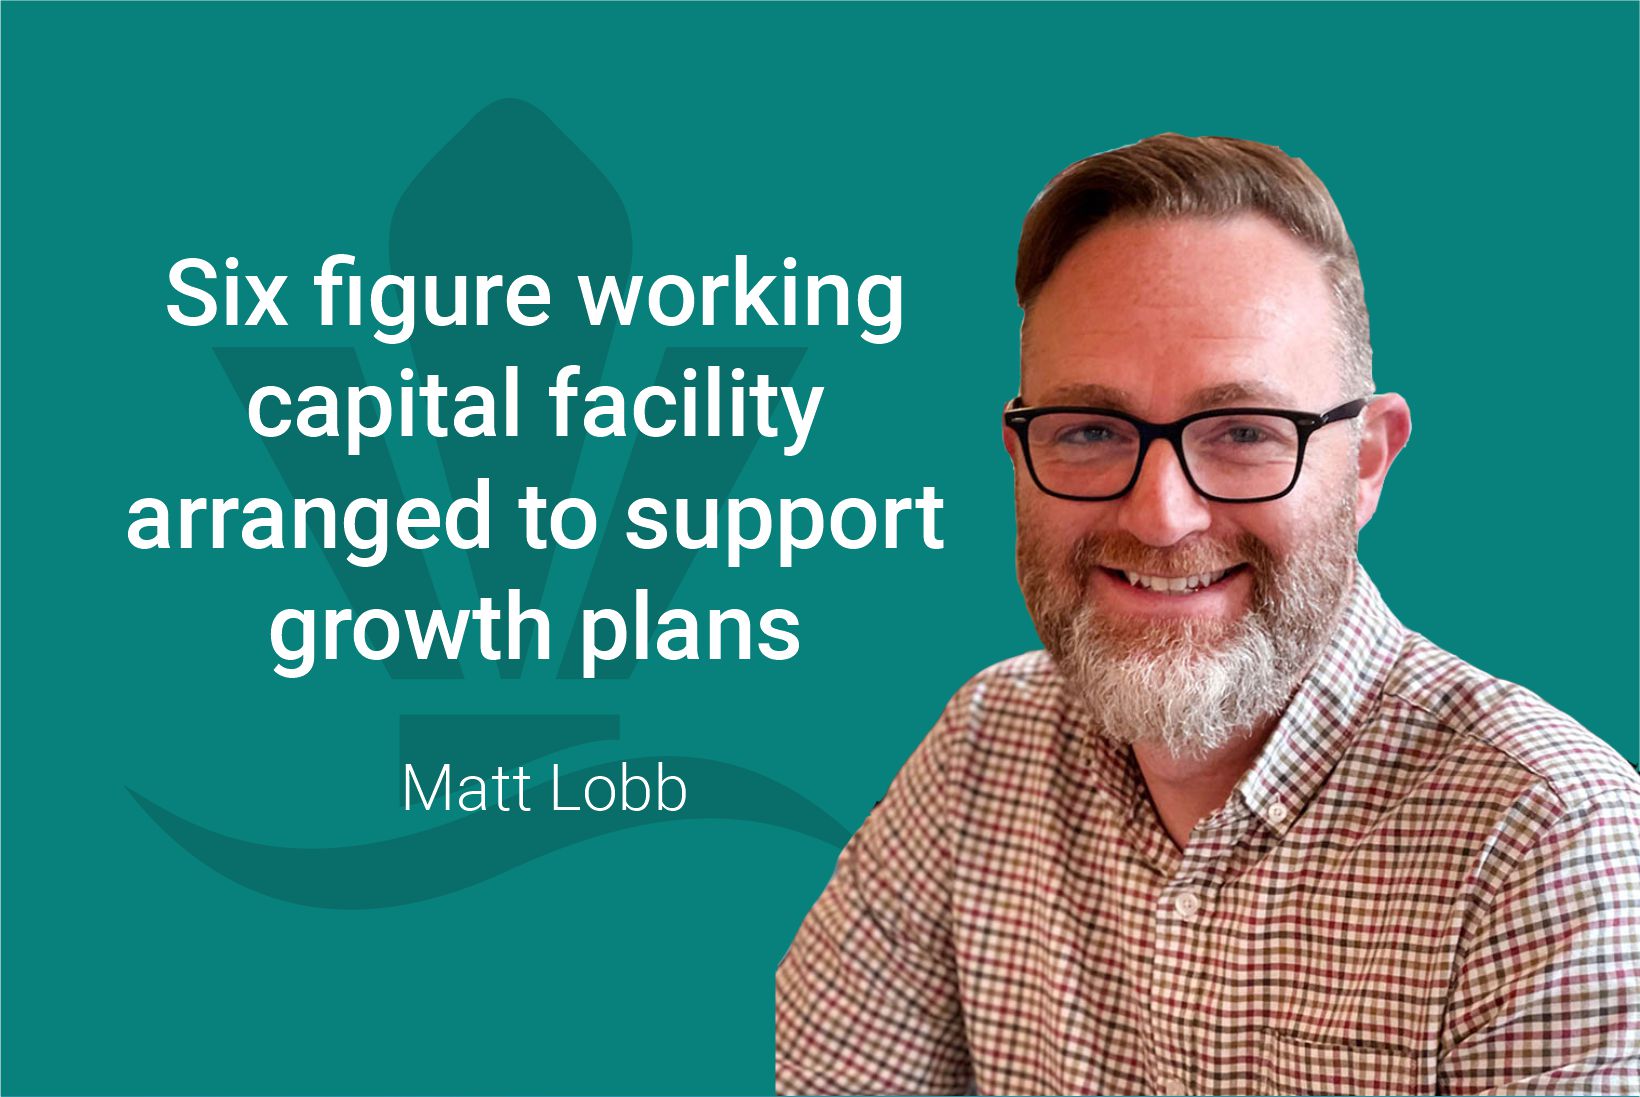 Matt Lobb arranges Working Capital